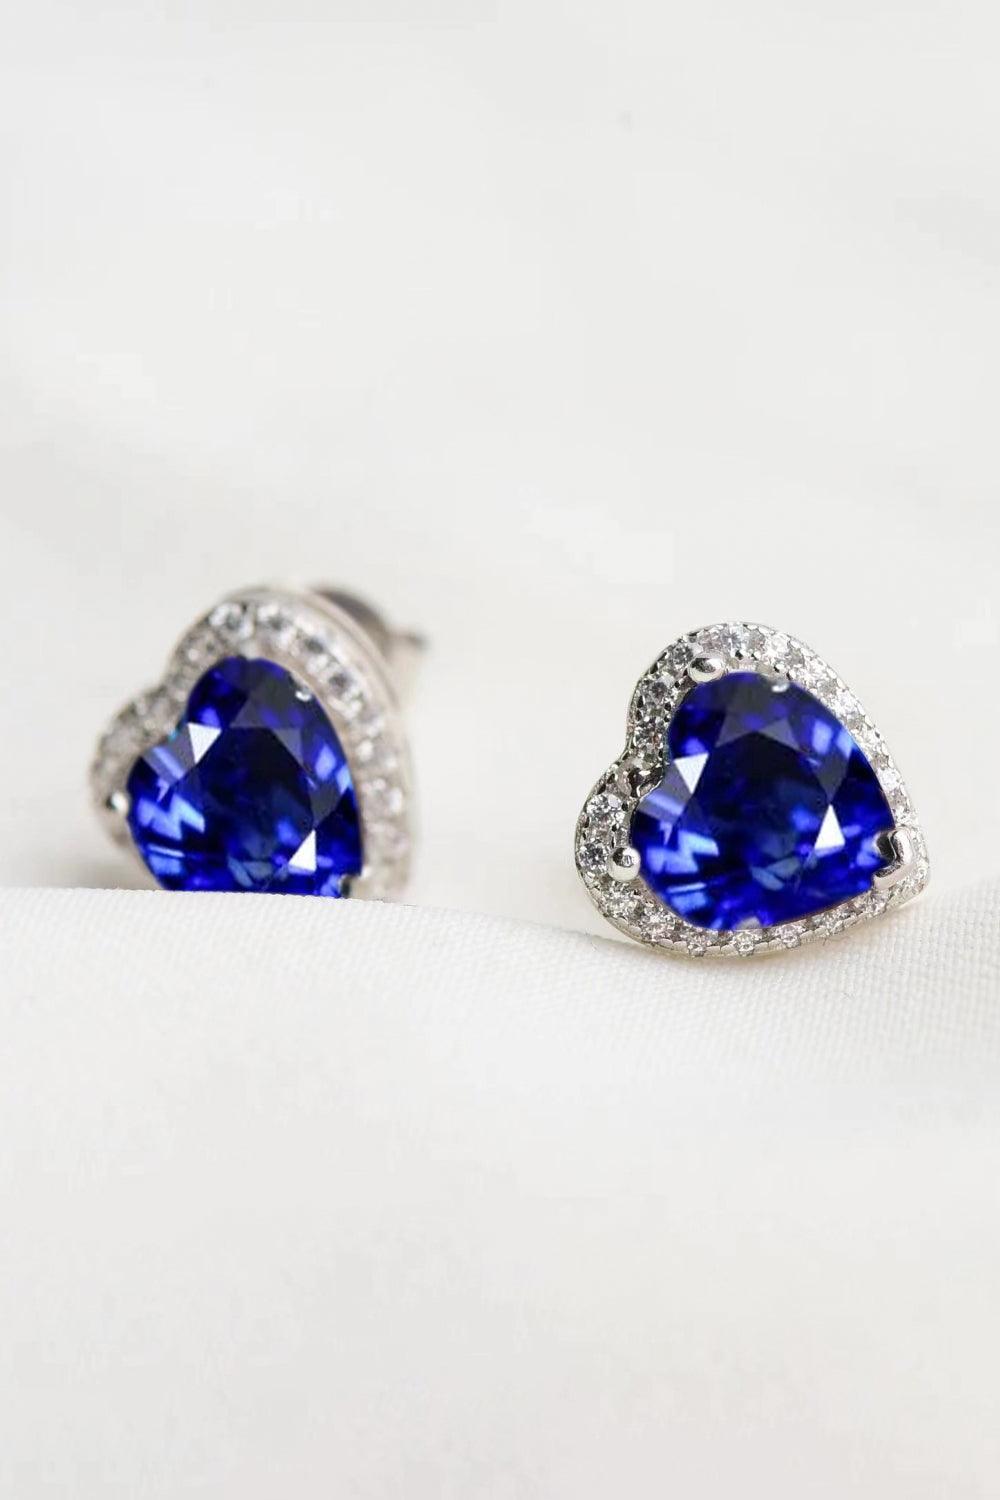 4 Carat Blue Heart-Shaped Moissanite Stud Earrings - MXSTUDIO.COM